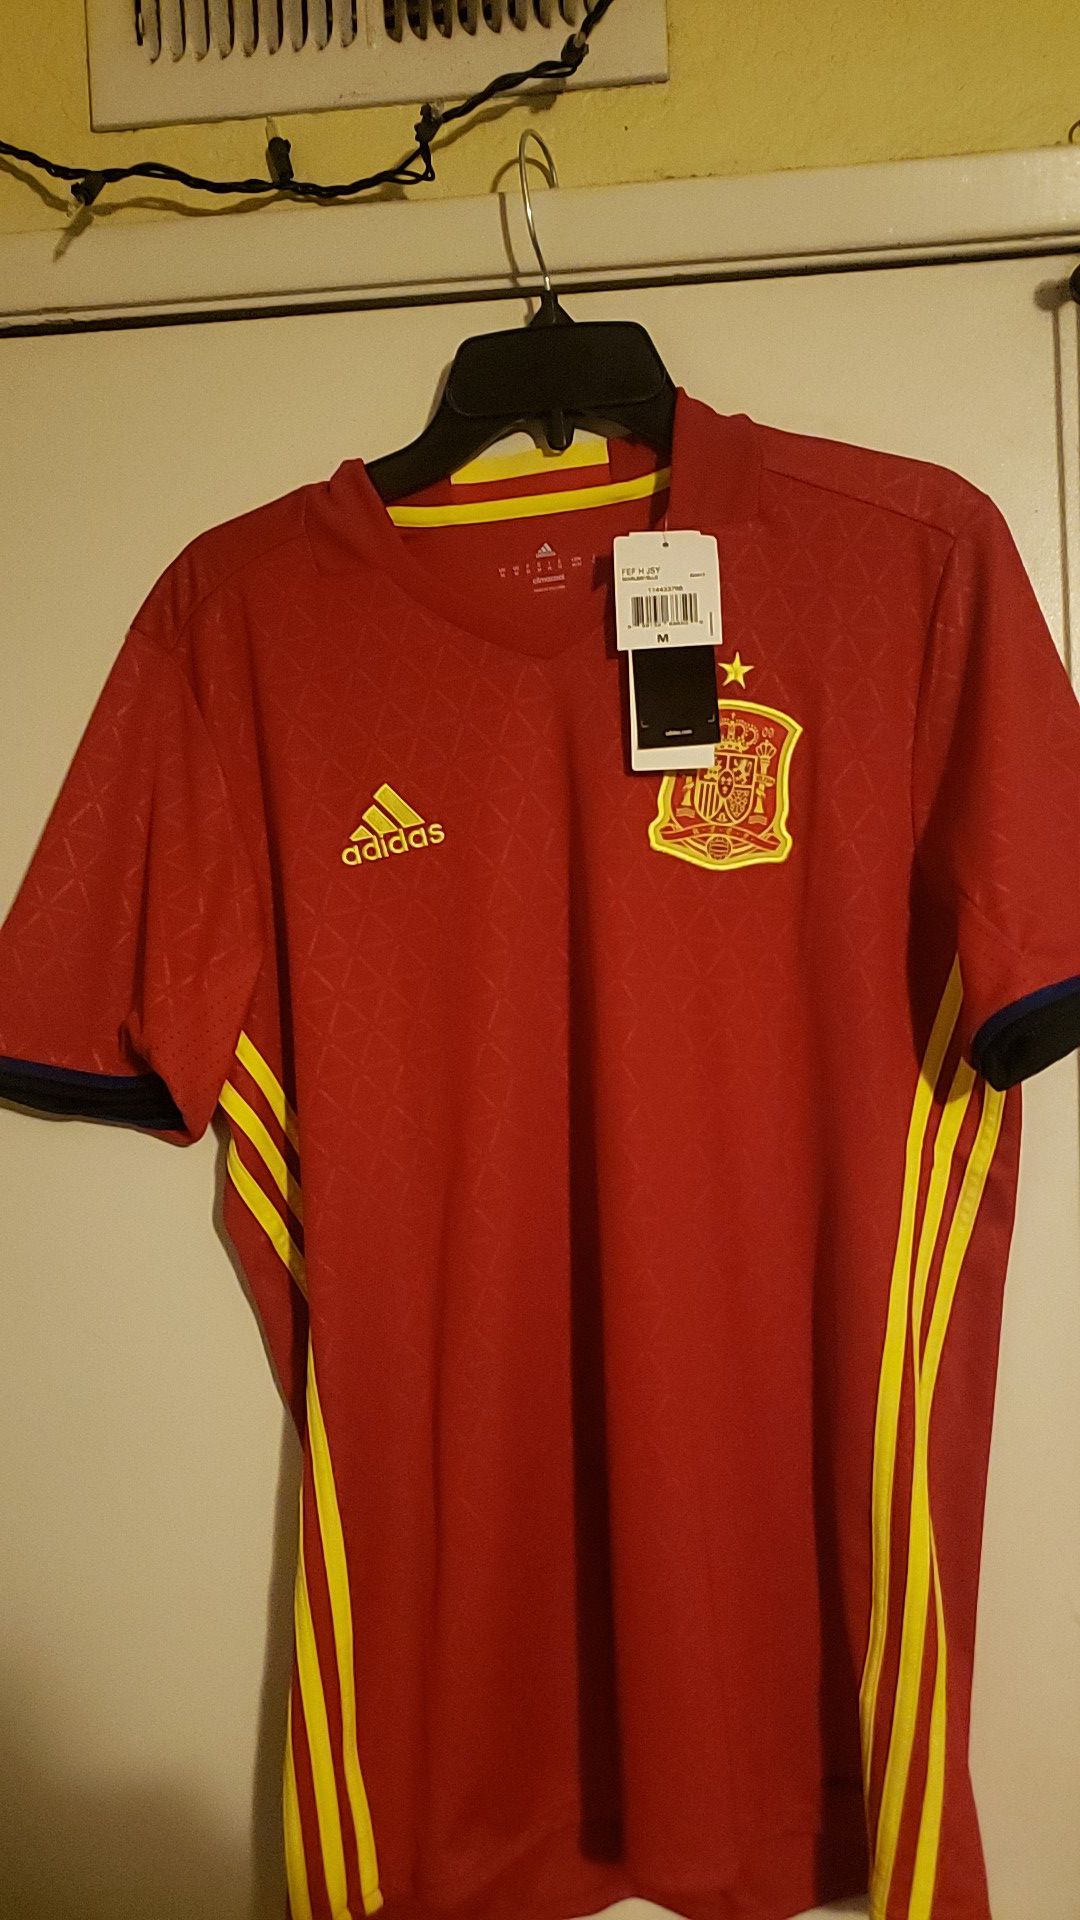 Spain National Soccer Team Jersey (M)